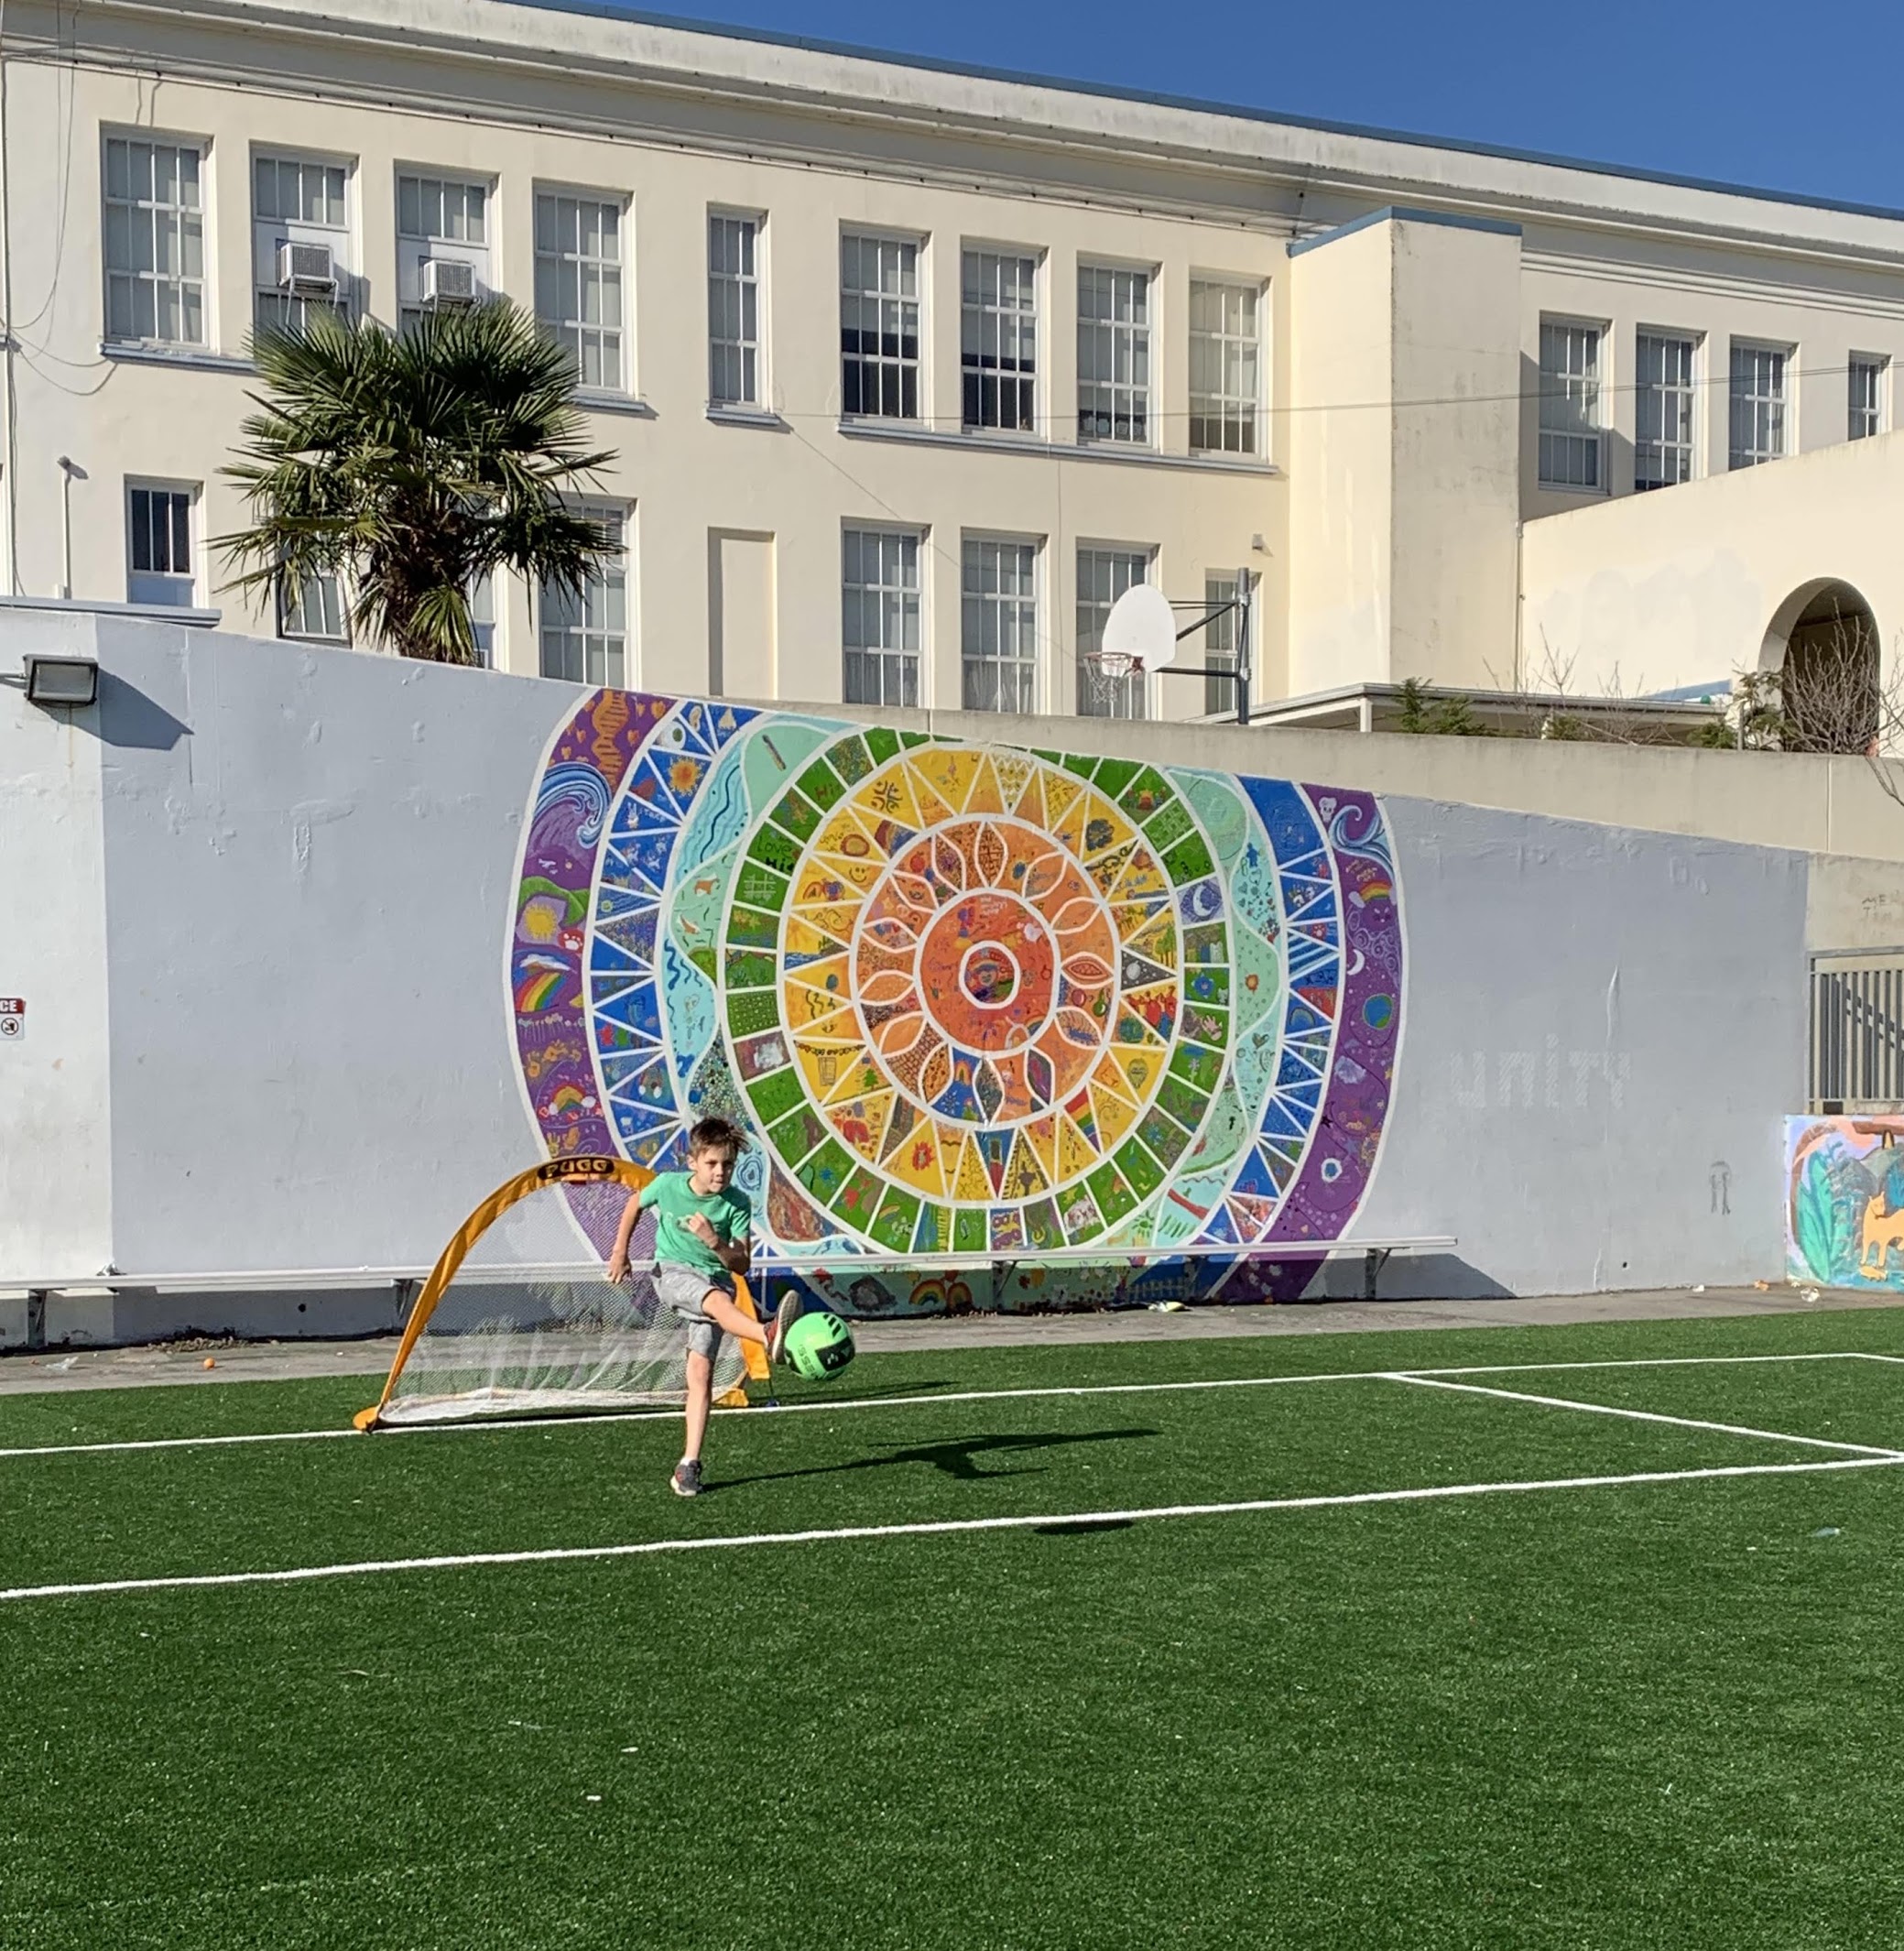 Boy kicking a soccer ball in front of Alvarado Mural